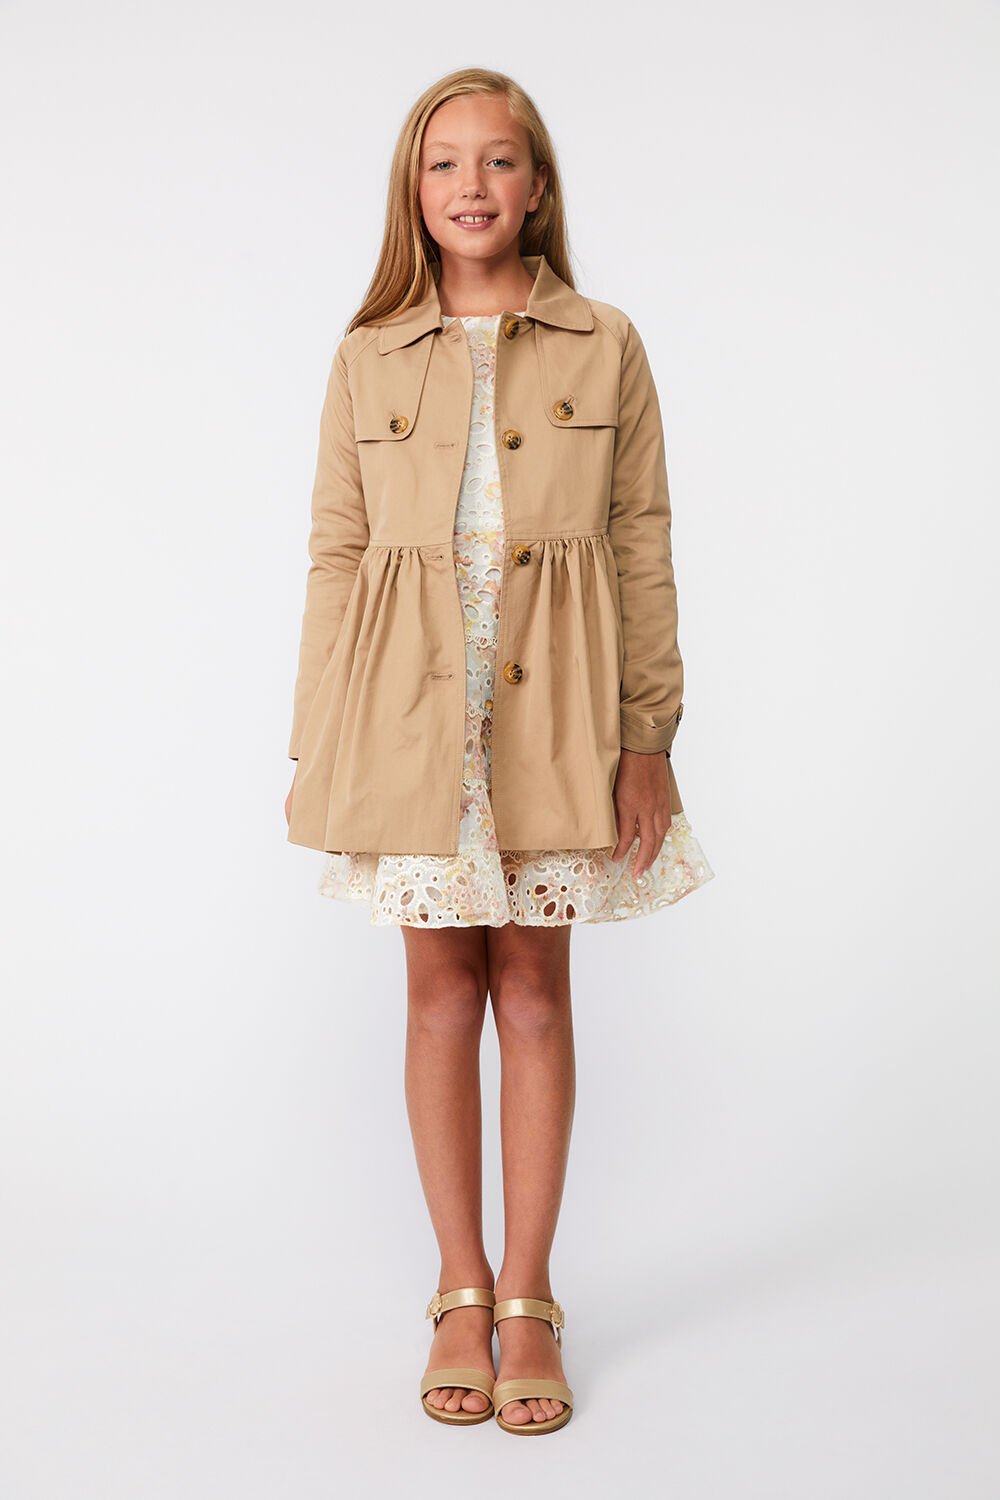 Girls Coats, Jackets & Hooded Coats for Girls